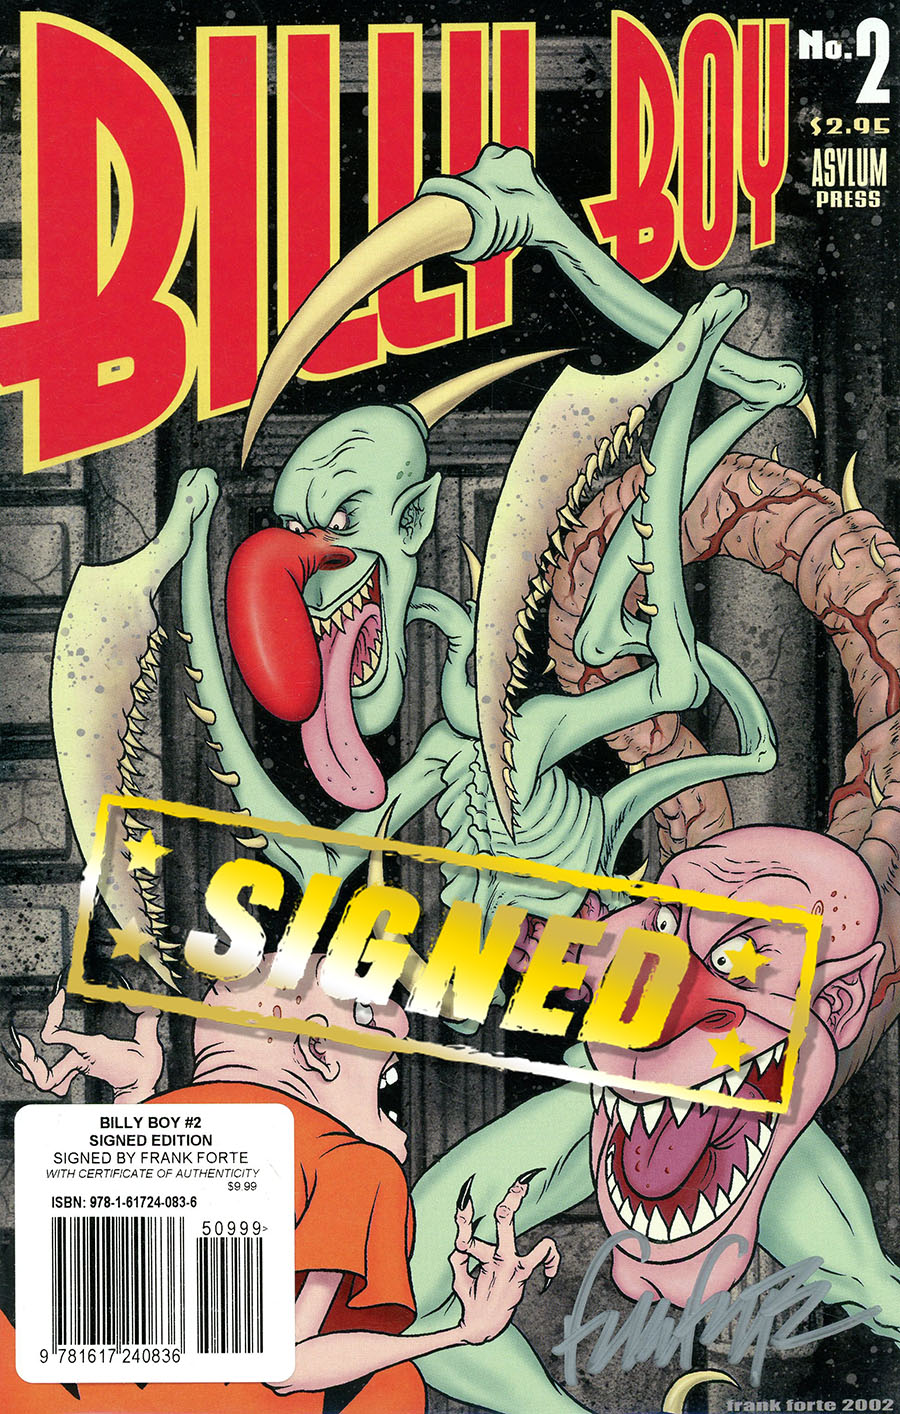 Billy Boy #2 Signed Edition